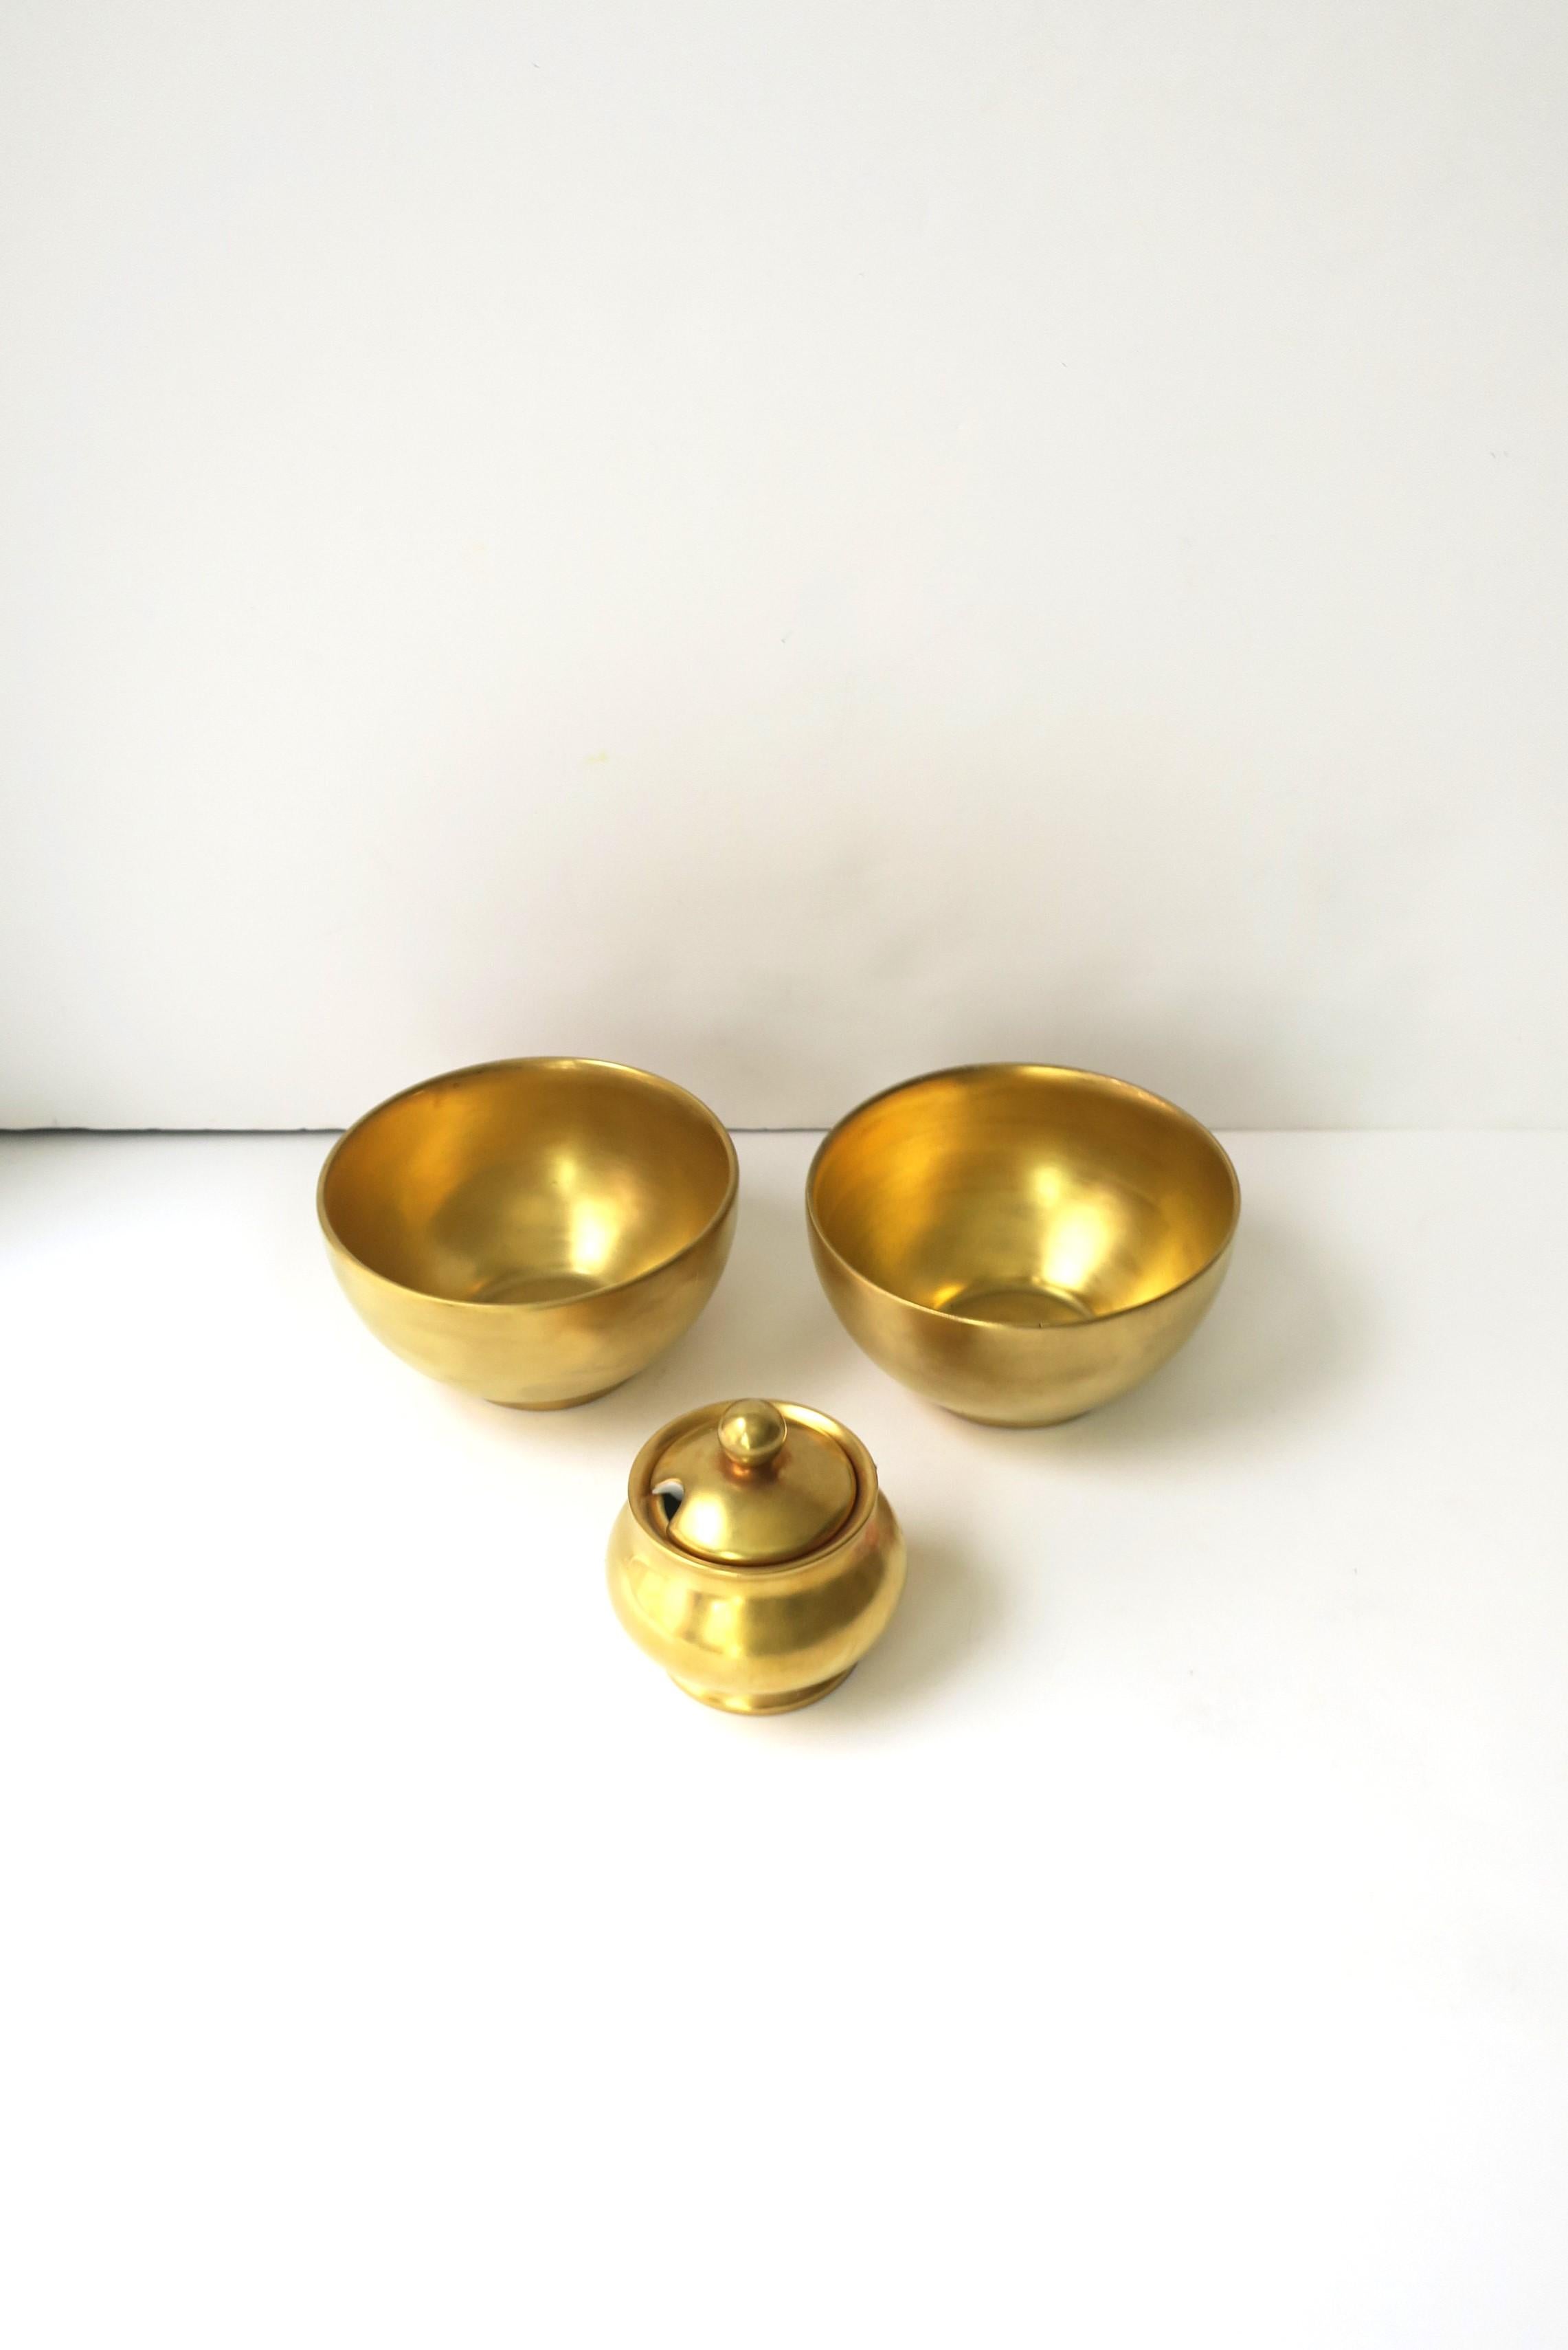 Contemporary Takashimaya Gold Japanese Porcelain Condiments or Sugar Bowl  For Sale